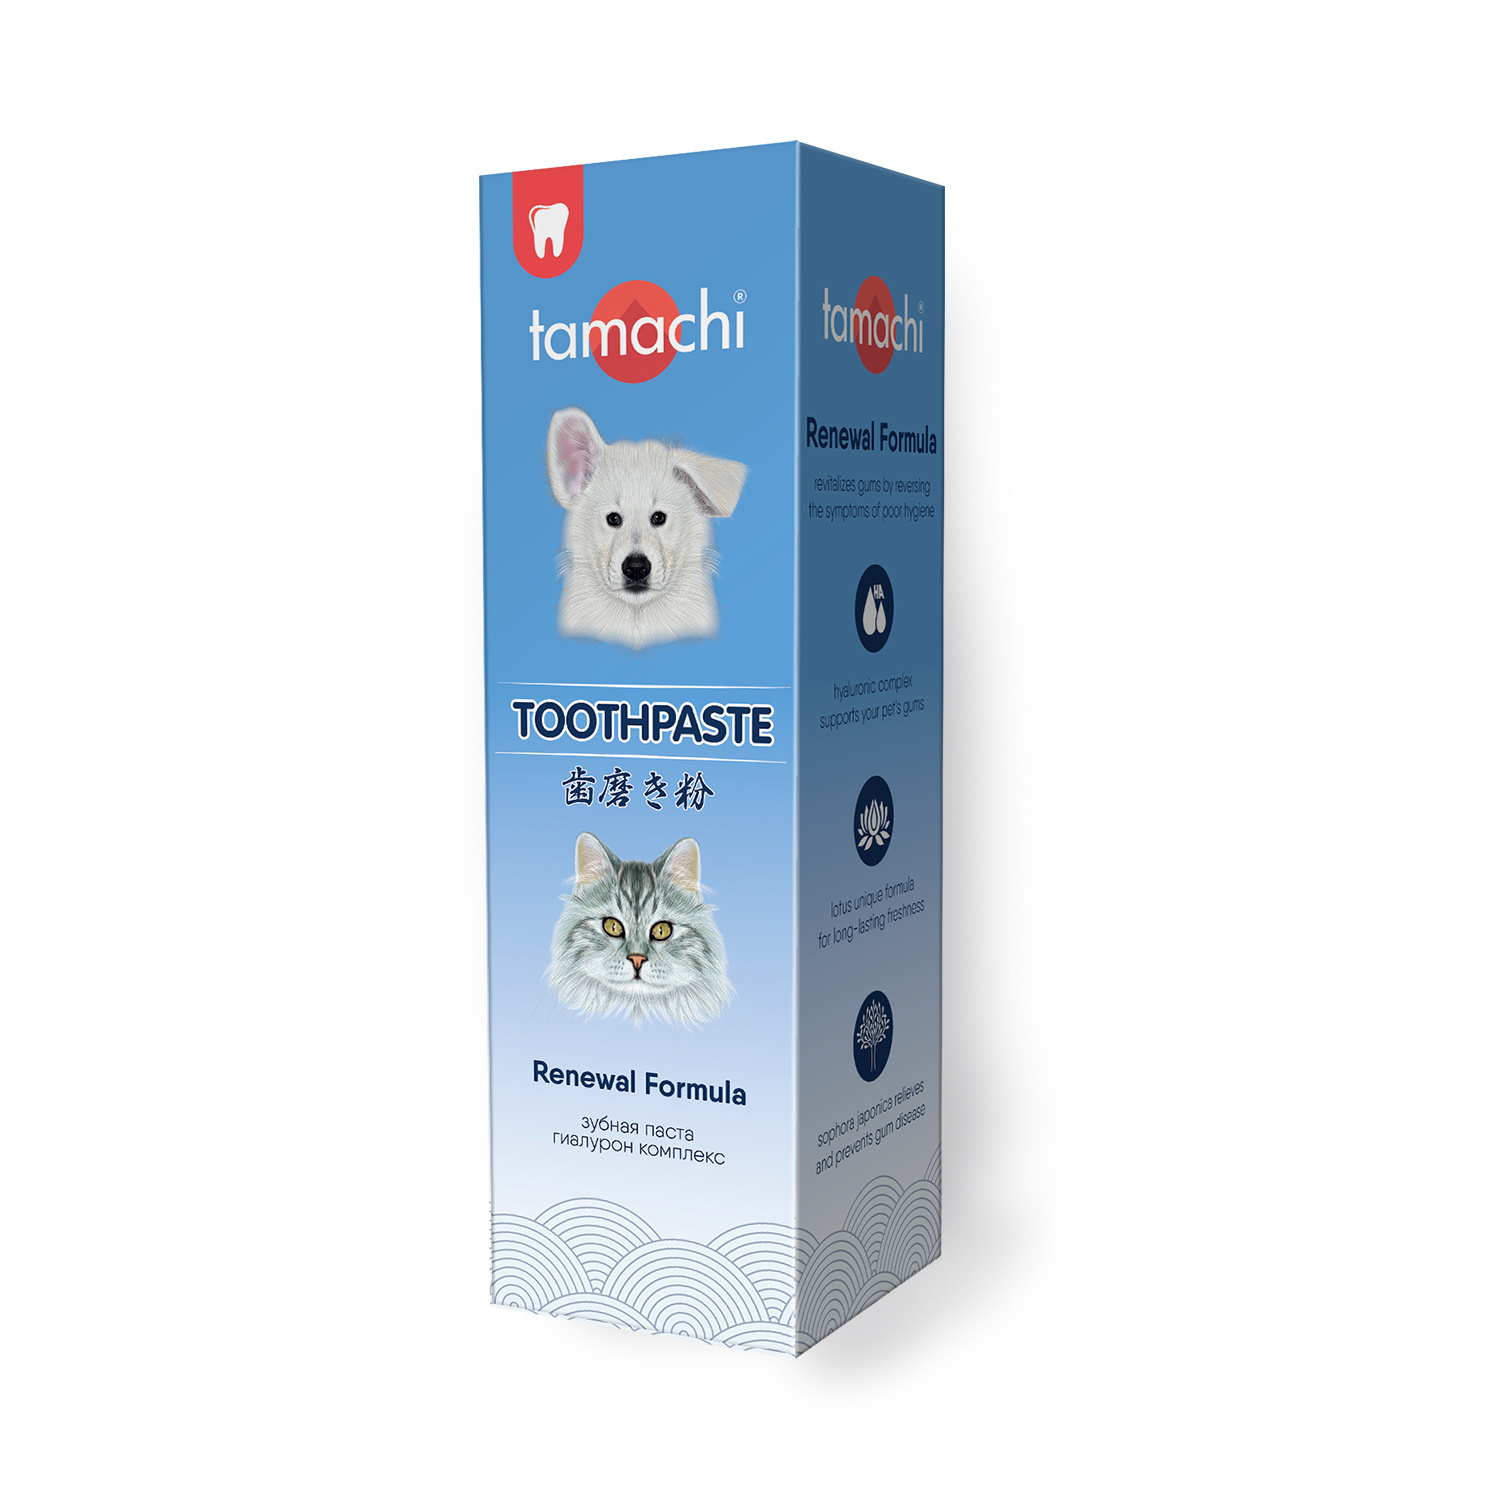 Tamachi Tamachi зубная паста, 100 мл (130 г) tamachi зубная паста renewal formula гиалурон комплекс 100 мл 0 12 кг 2 штуки